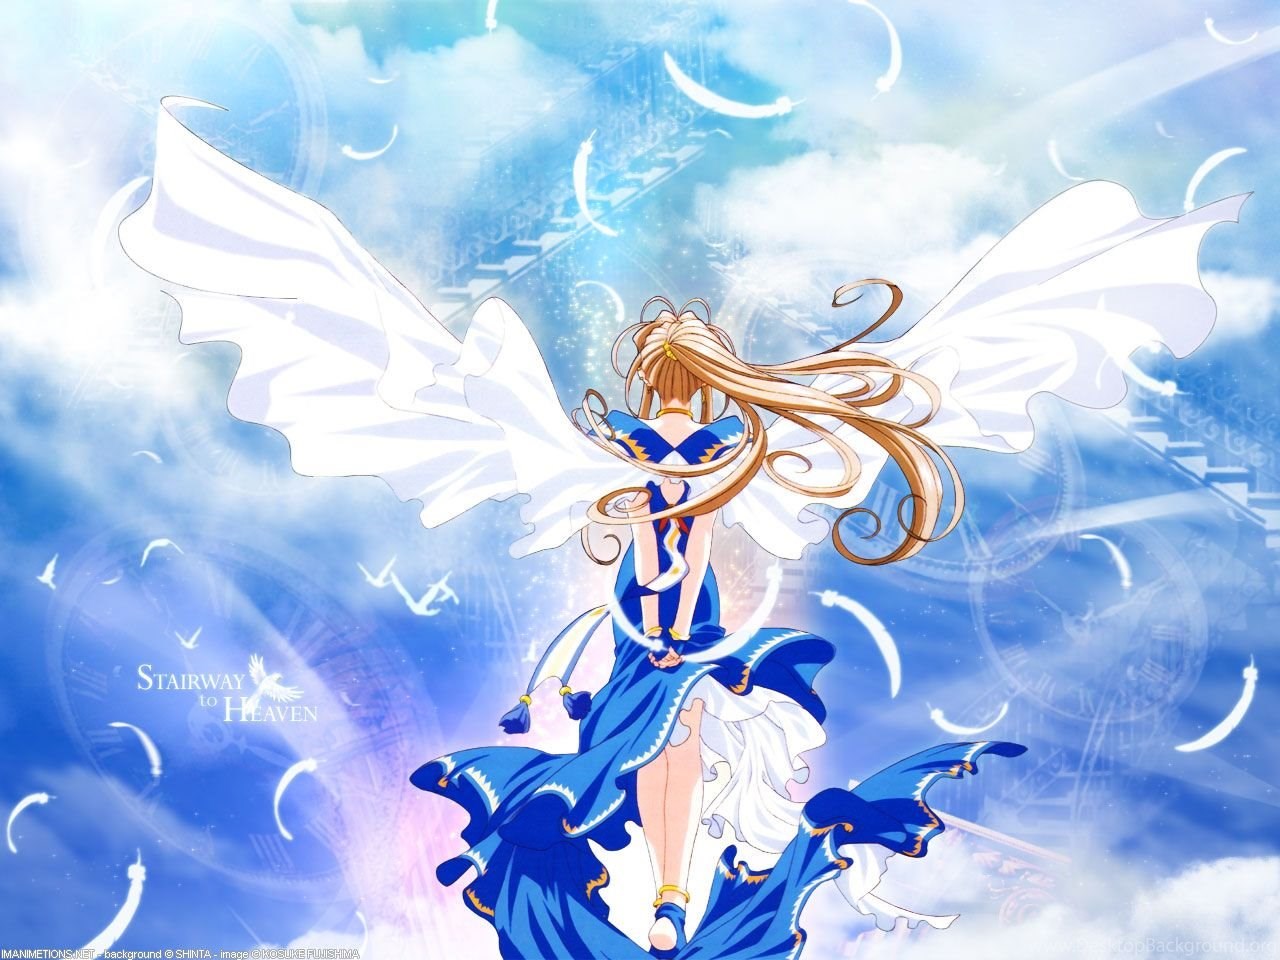 Wallpaper Ah! My Goddess Anime Image Desktop Background